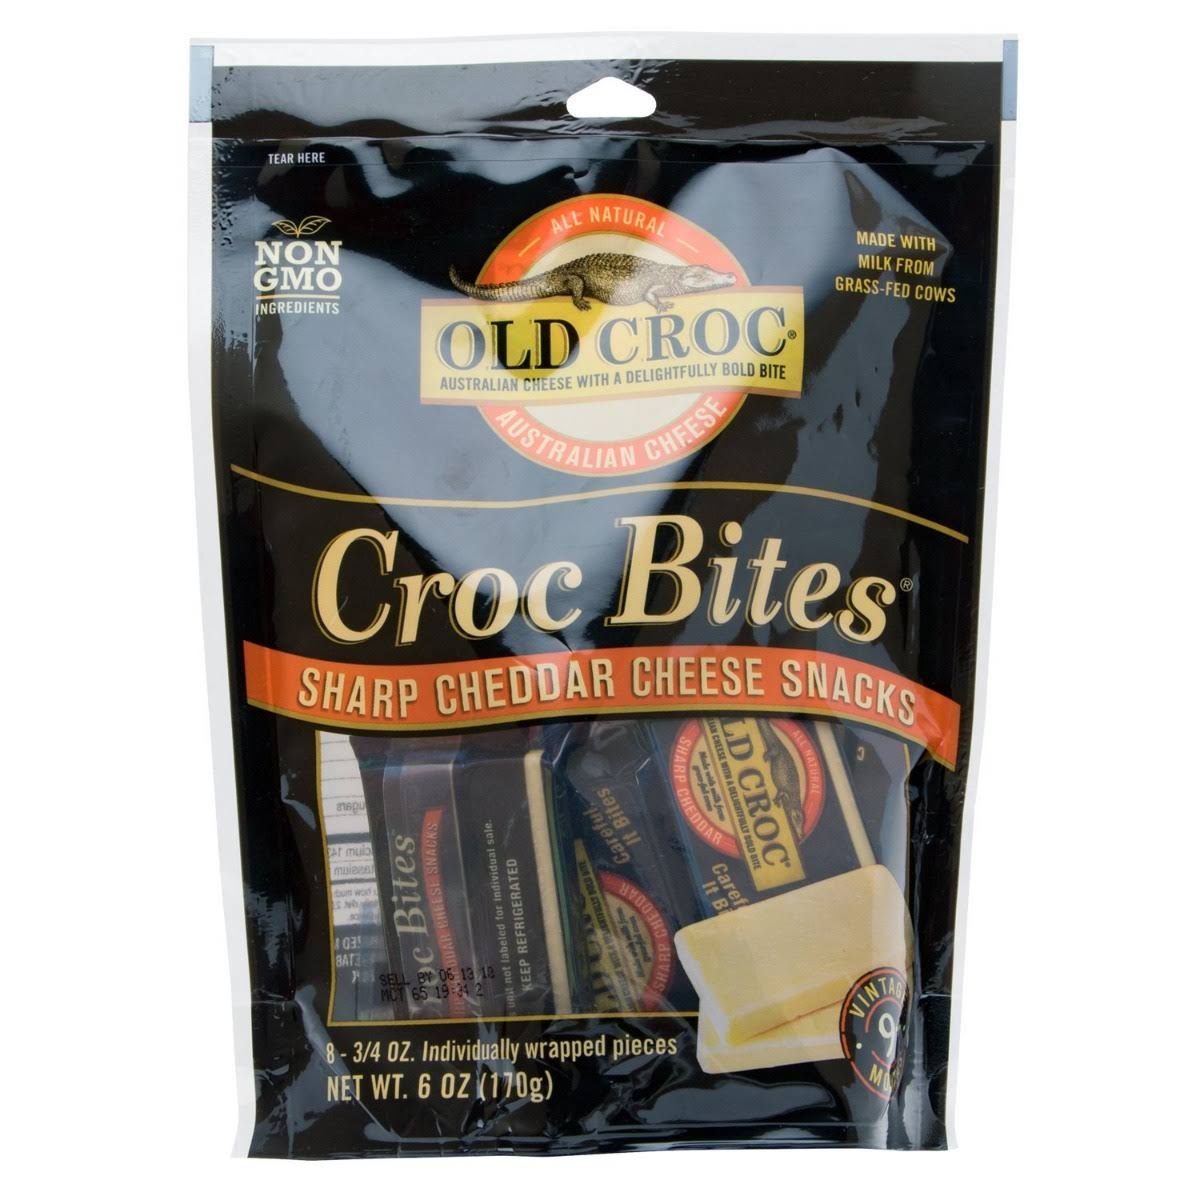 Old Croc: Croc Bites Sharp Cheddar Cheese Snacks 8ct, 6 Oz